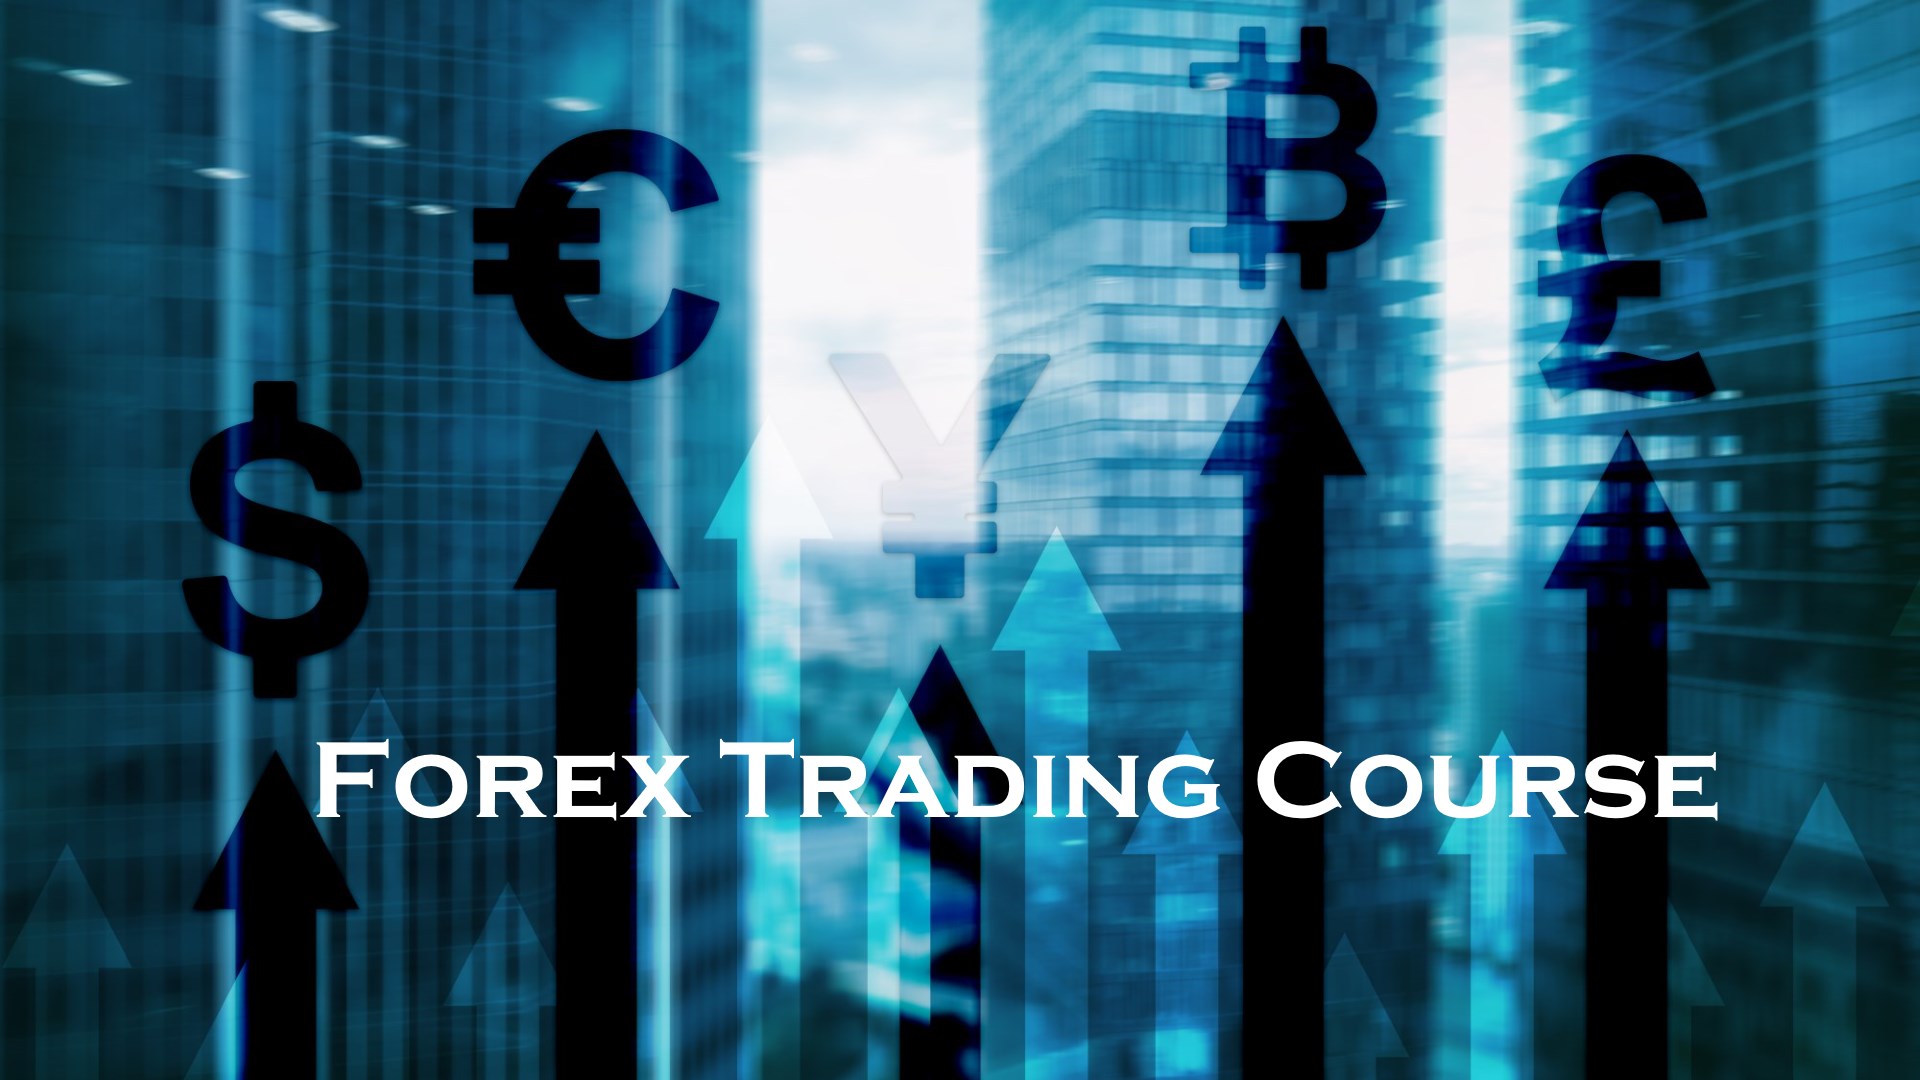 kryptowährung top-handelsperson forex trading training course london